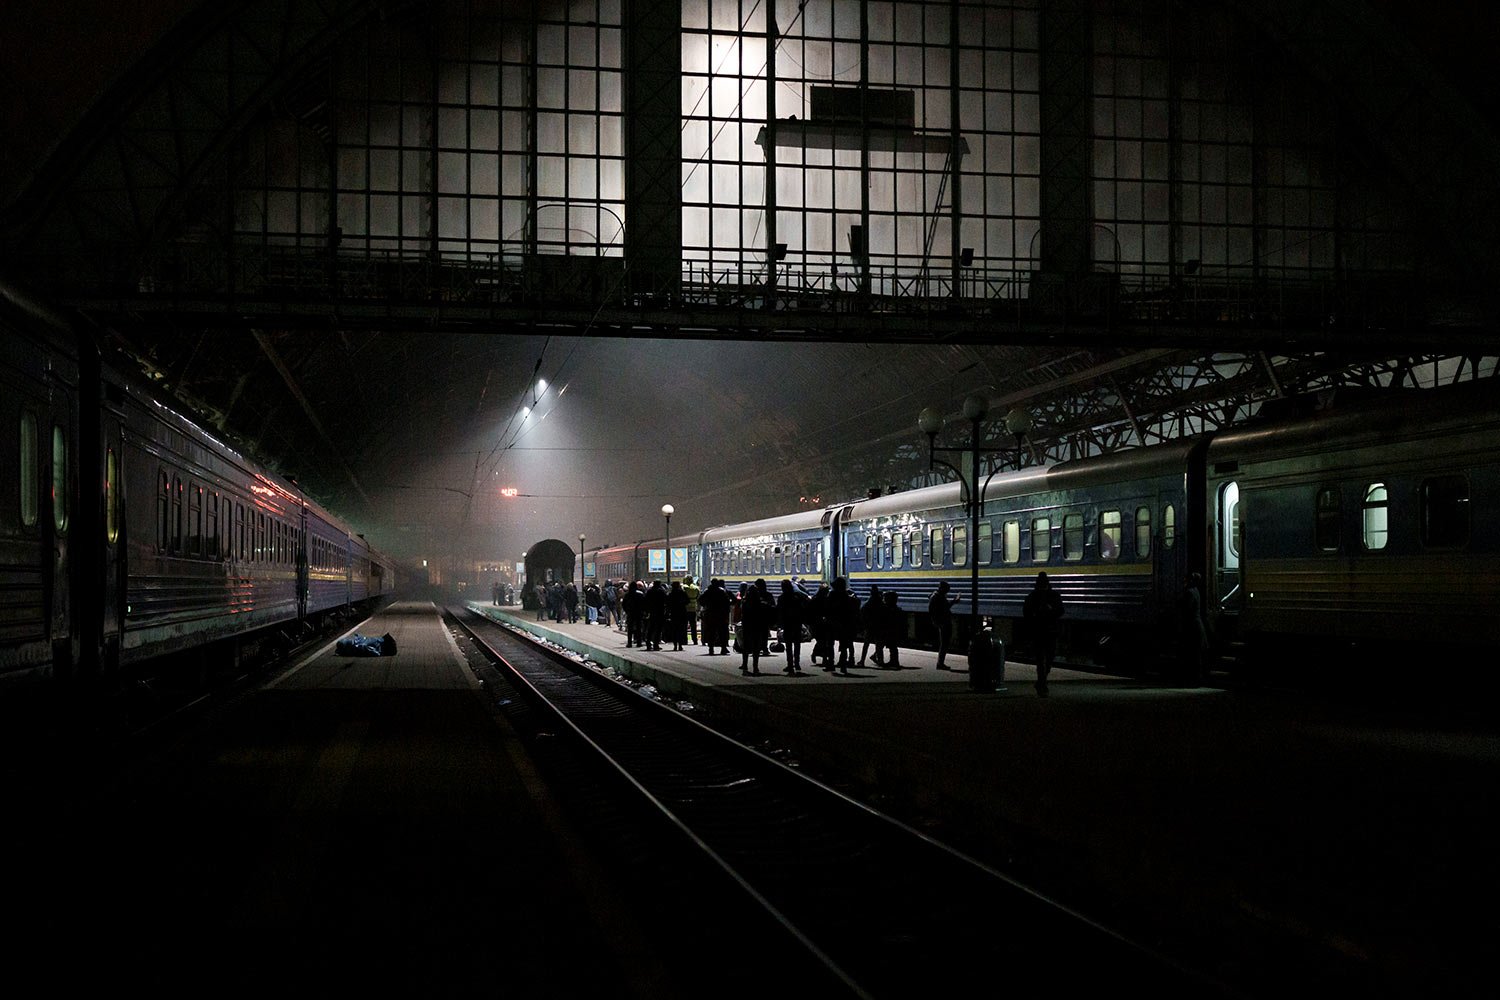  People trying to flee Ukraine wait for trains inside Lviv railway station in Lviv, western Ukraine, Friday, March 4, 2022. (AP Photo/Felipe Dana)  